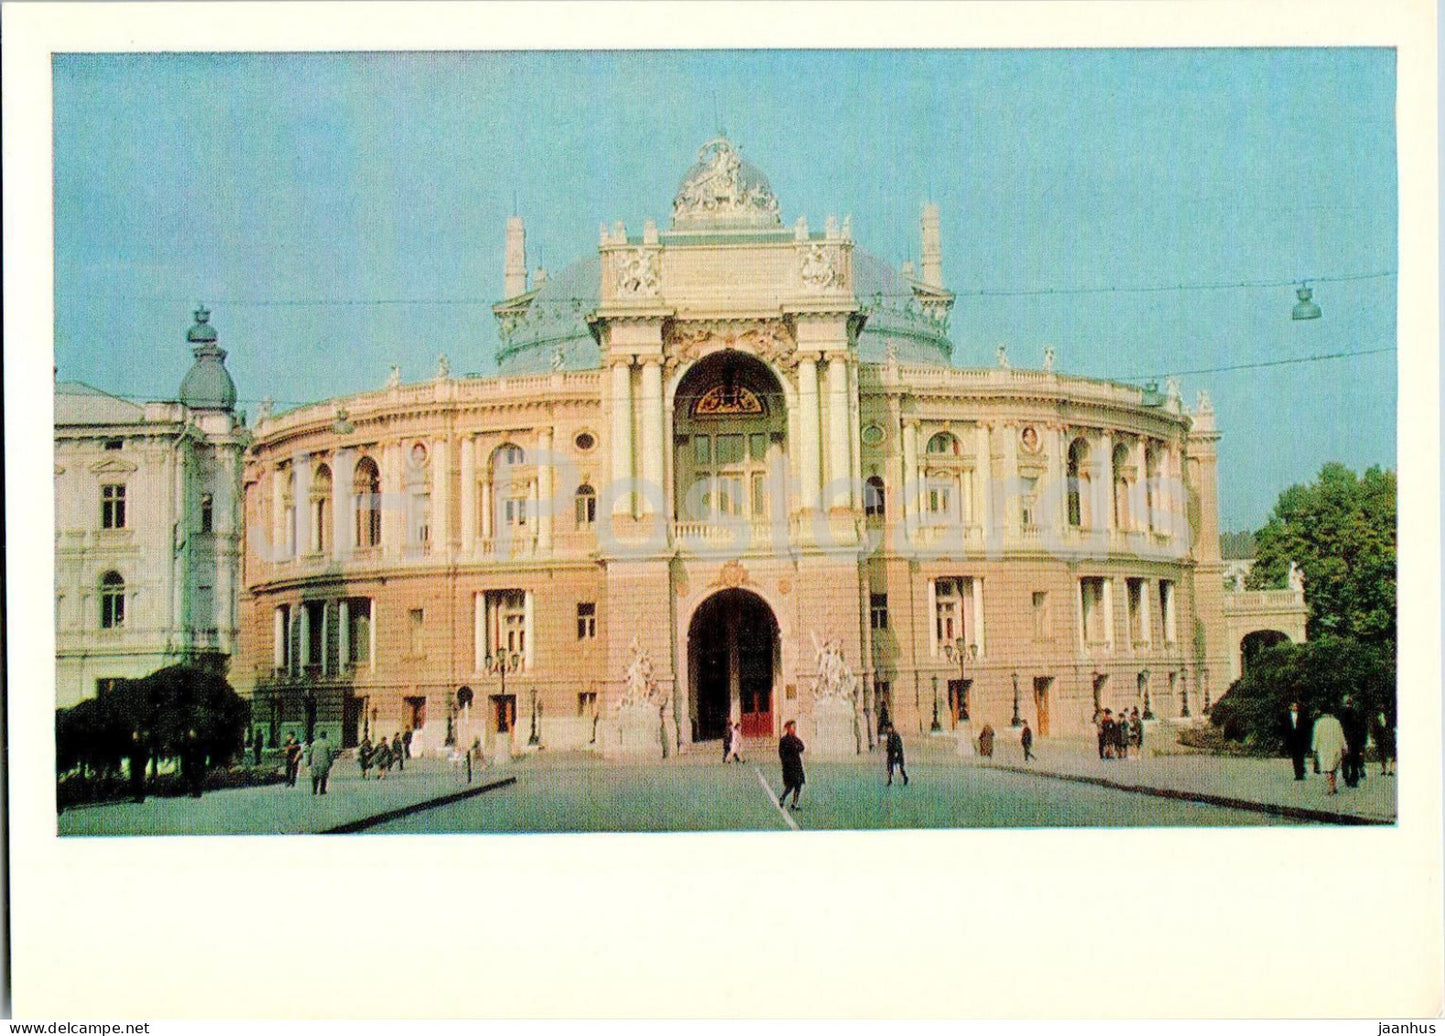 Odessa - Odesa - State Academic Theatre of Opera and Ballet - 1970 - Ukraine USSR - unused - JH Postcards